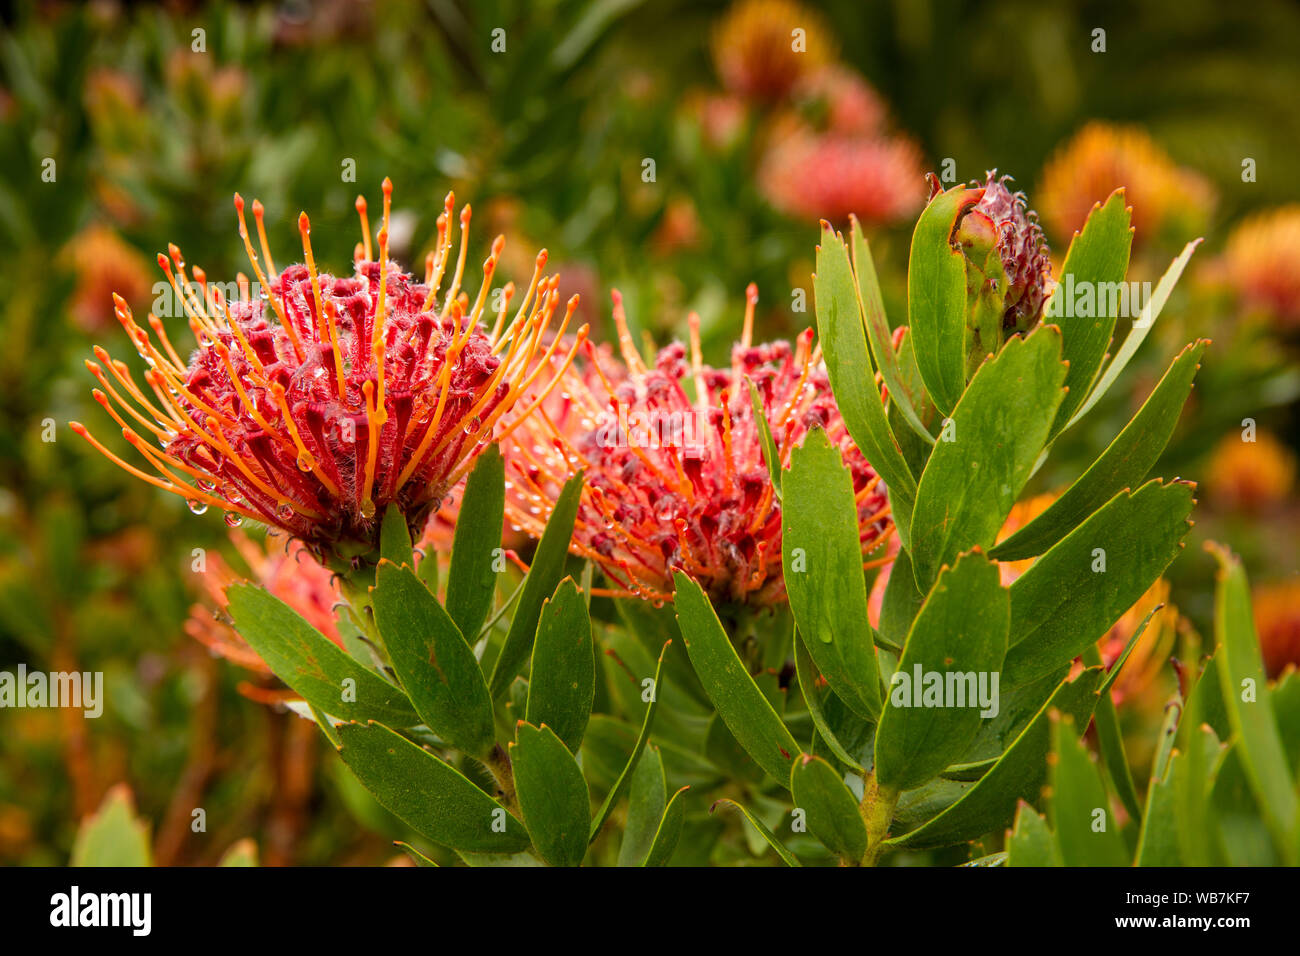 UK, England, Scilly Islands, Tresco, Abbey Gardens, globe-shaped, orange flower heads of, Leucospernum patersonii,  Protea native plant of South Afric Stock Photo